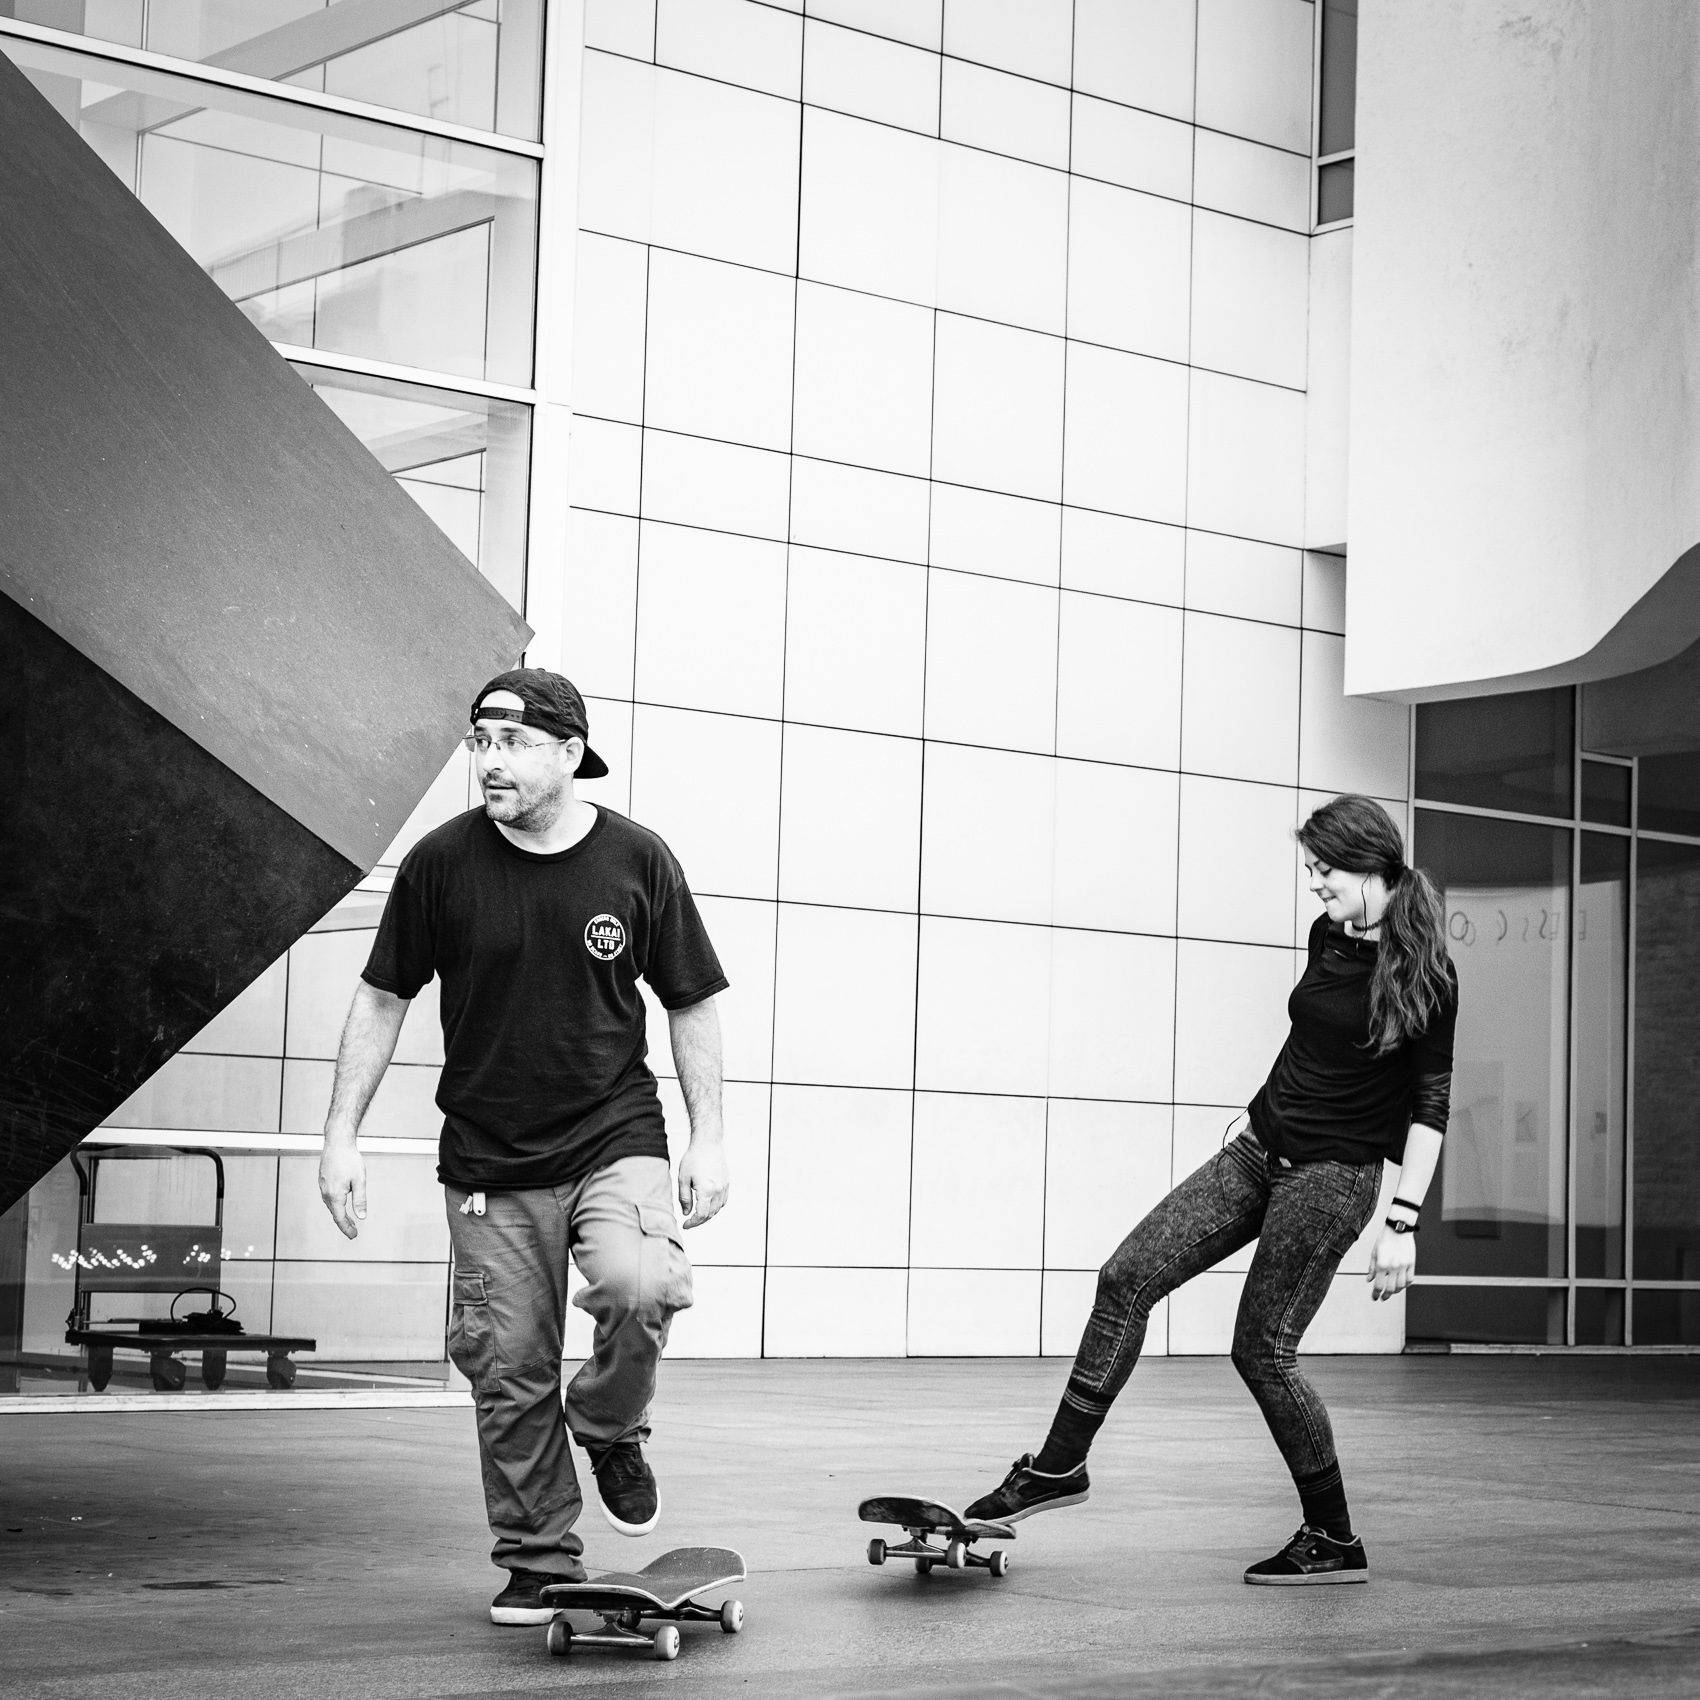 Skateboarders outside the Museu d'Art Contemporani de Barcelona (MACBA). BM001